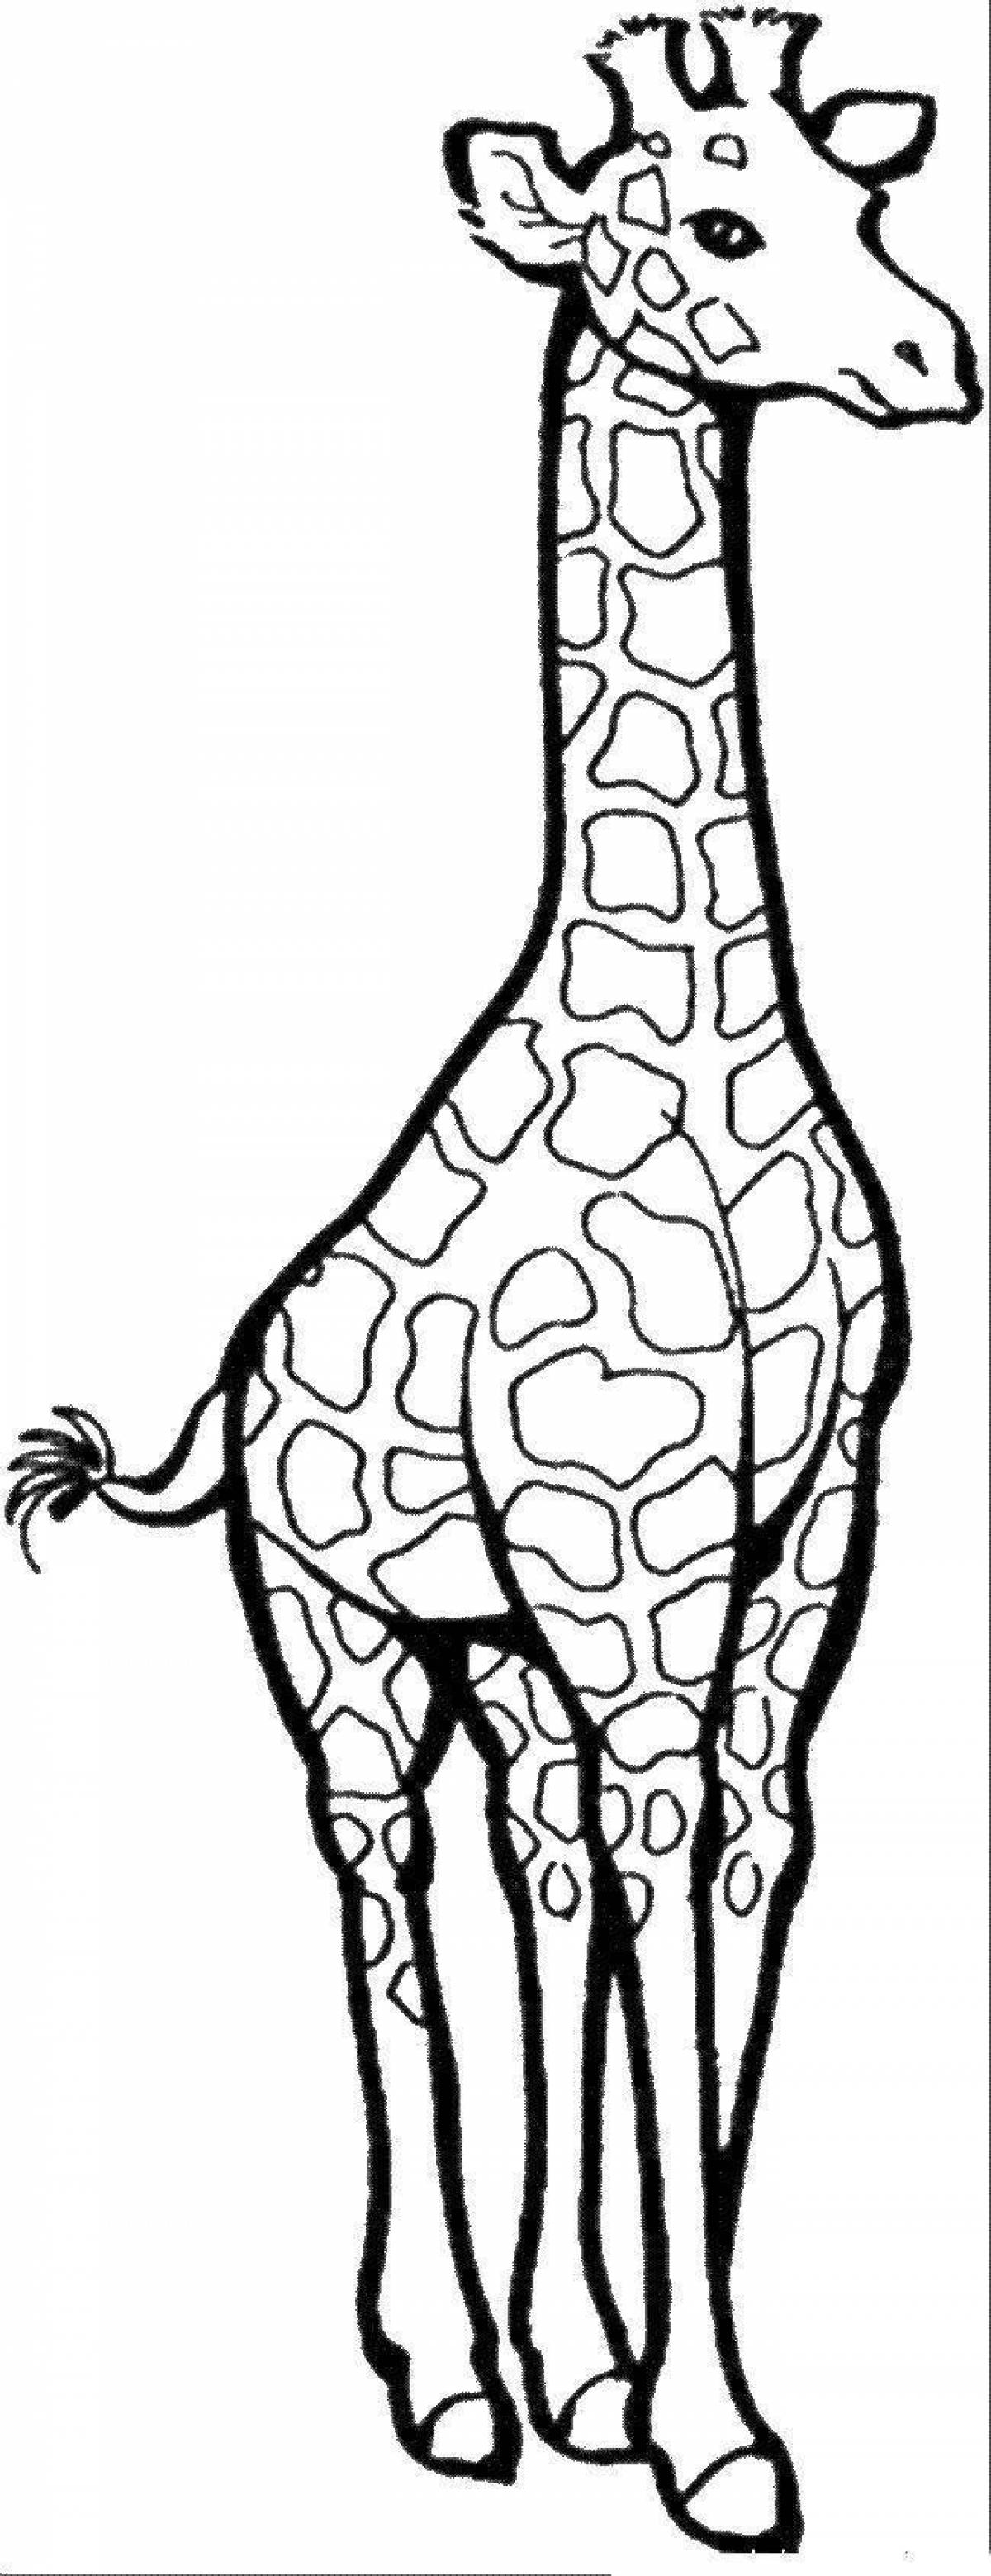 Joyful giraffe drawing for kids